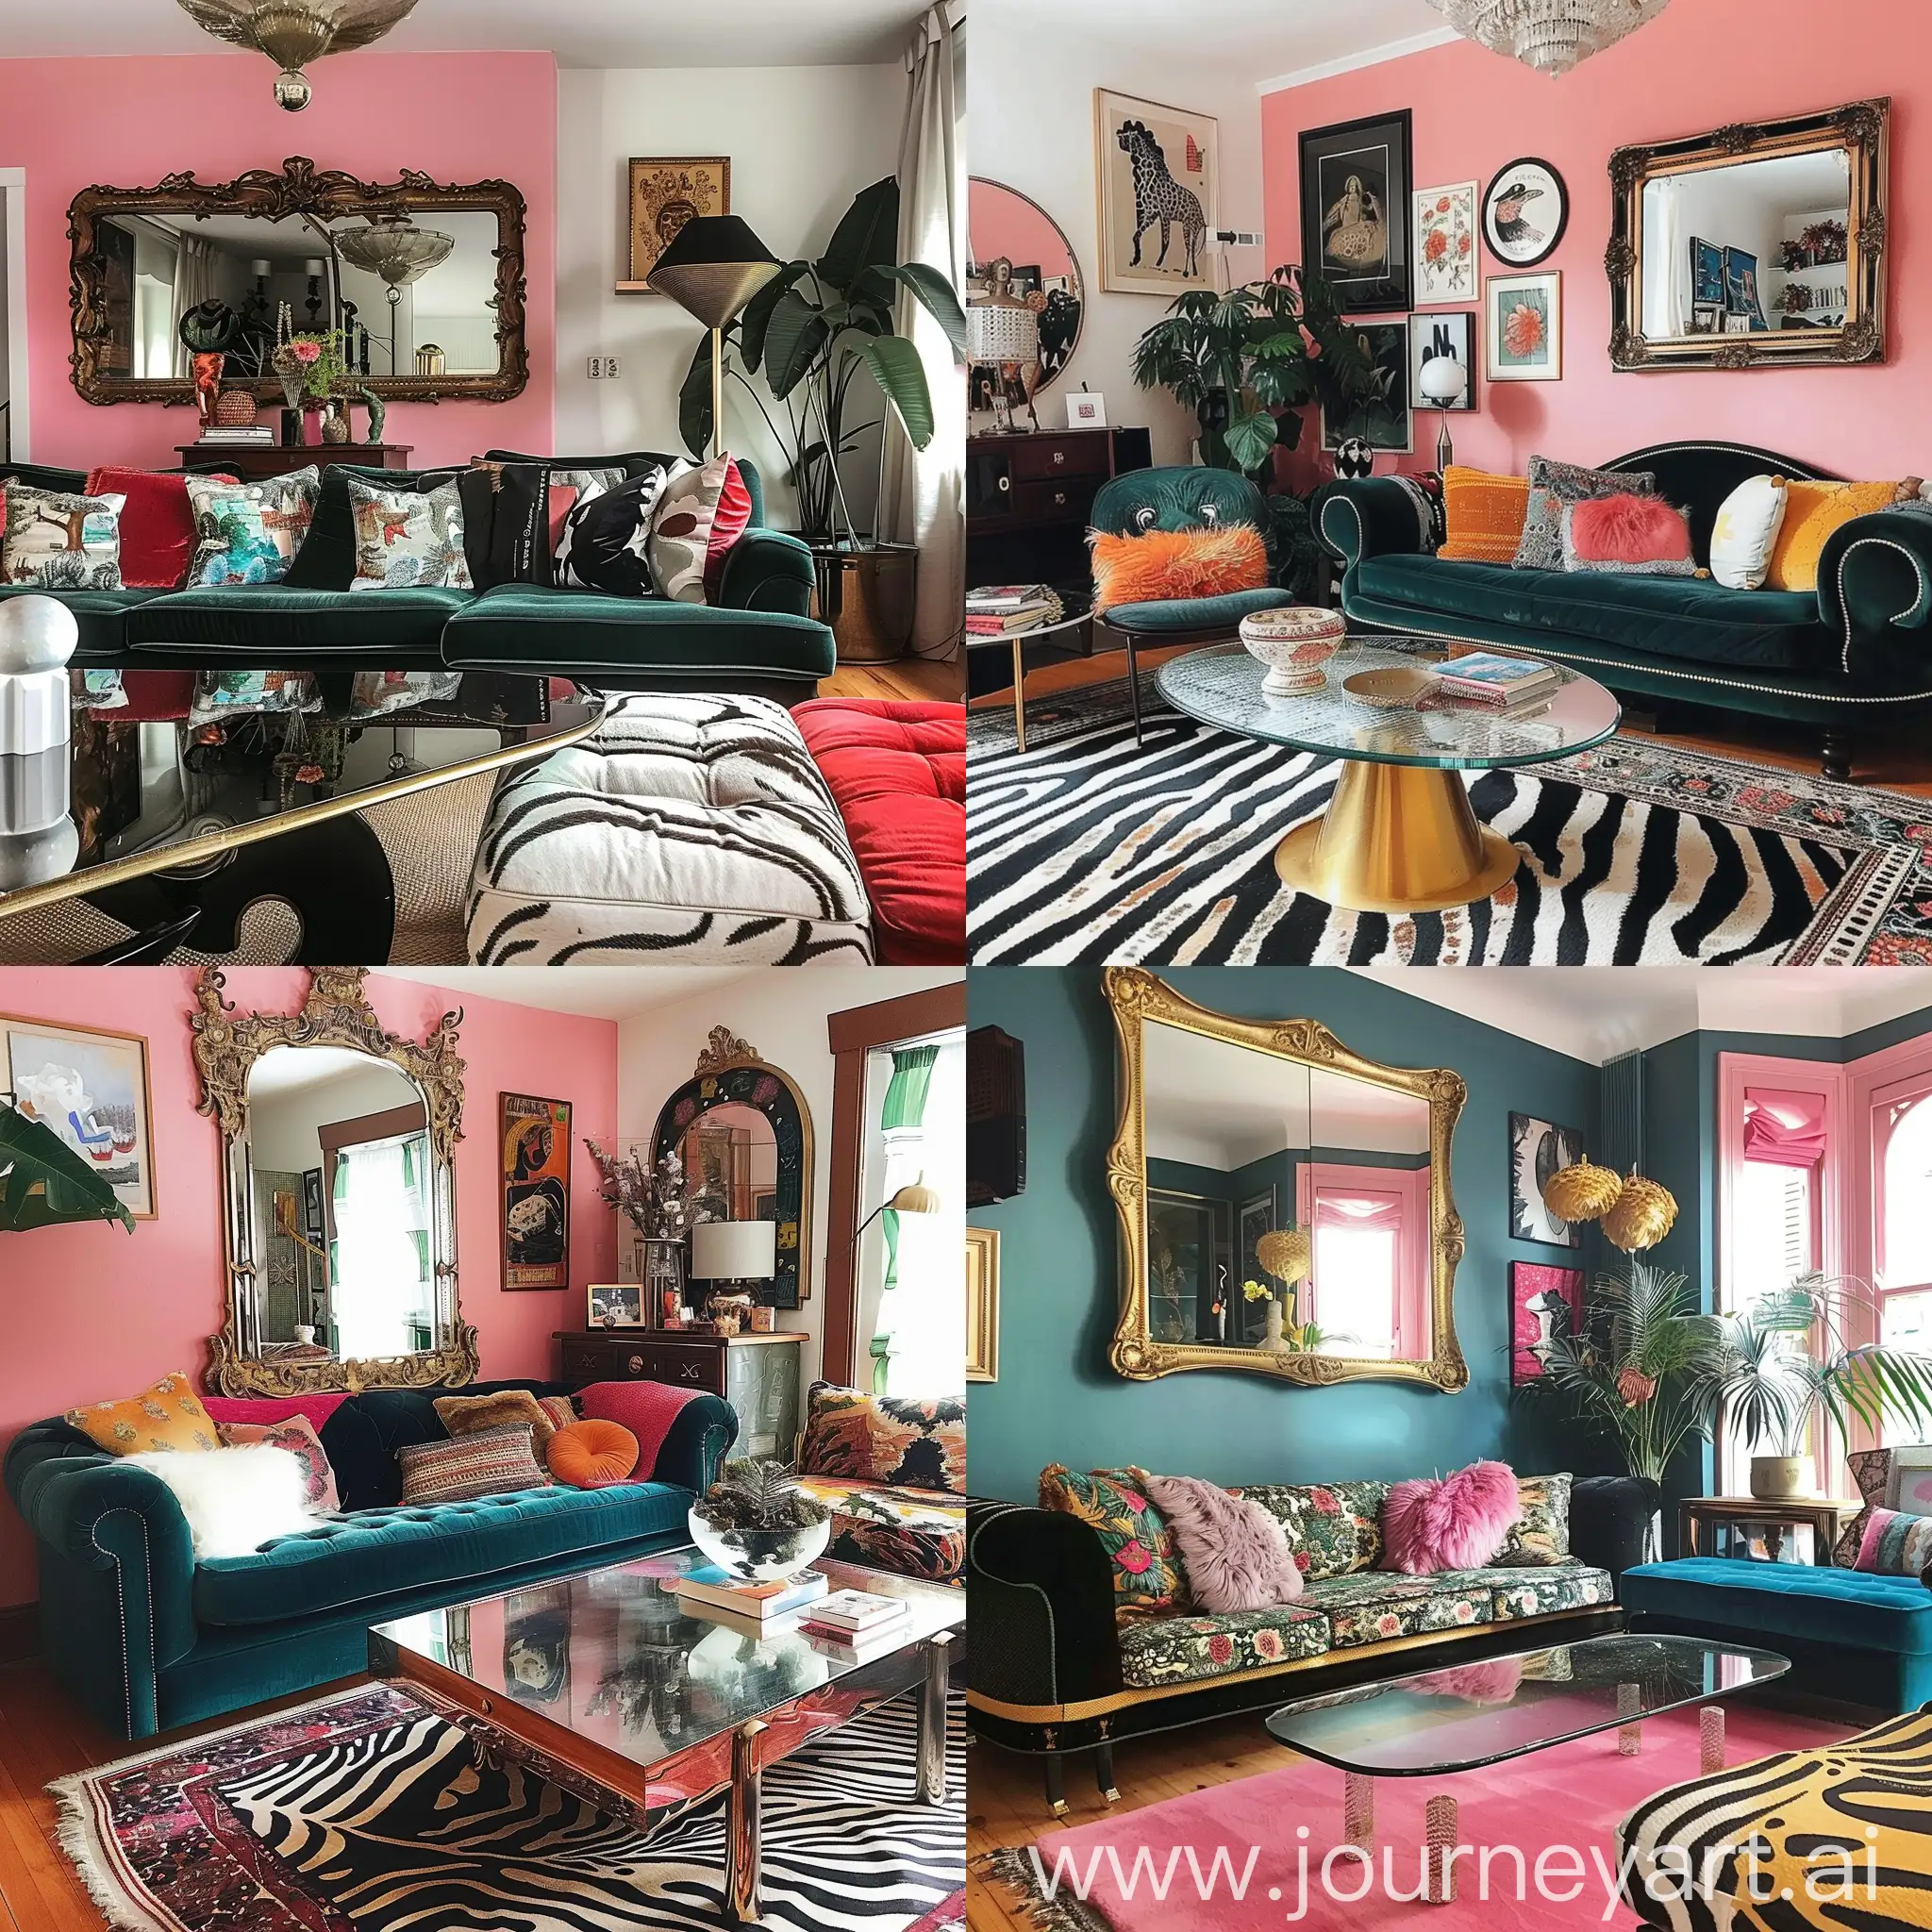 Vibrant-Eclectic-Maximalist-Living-Room-Design-with-Unique-Decor